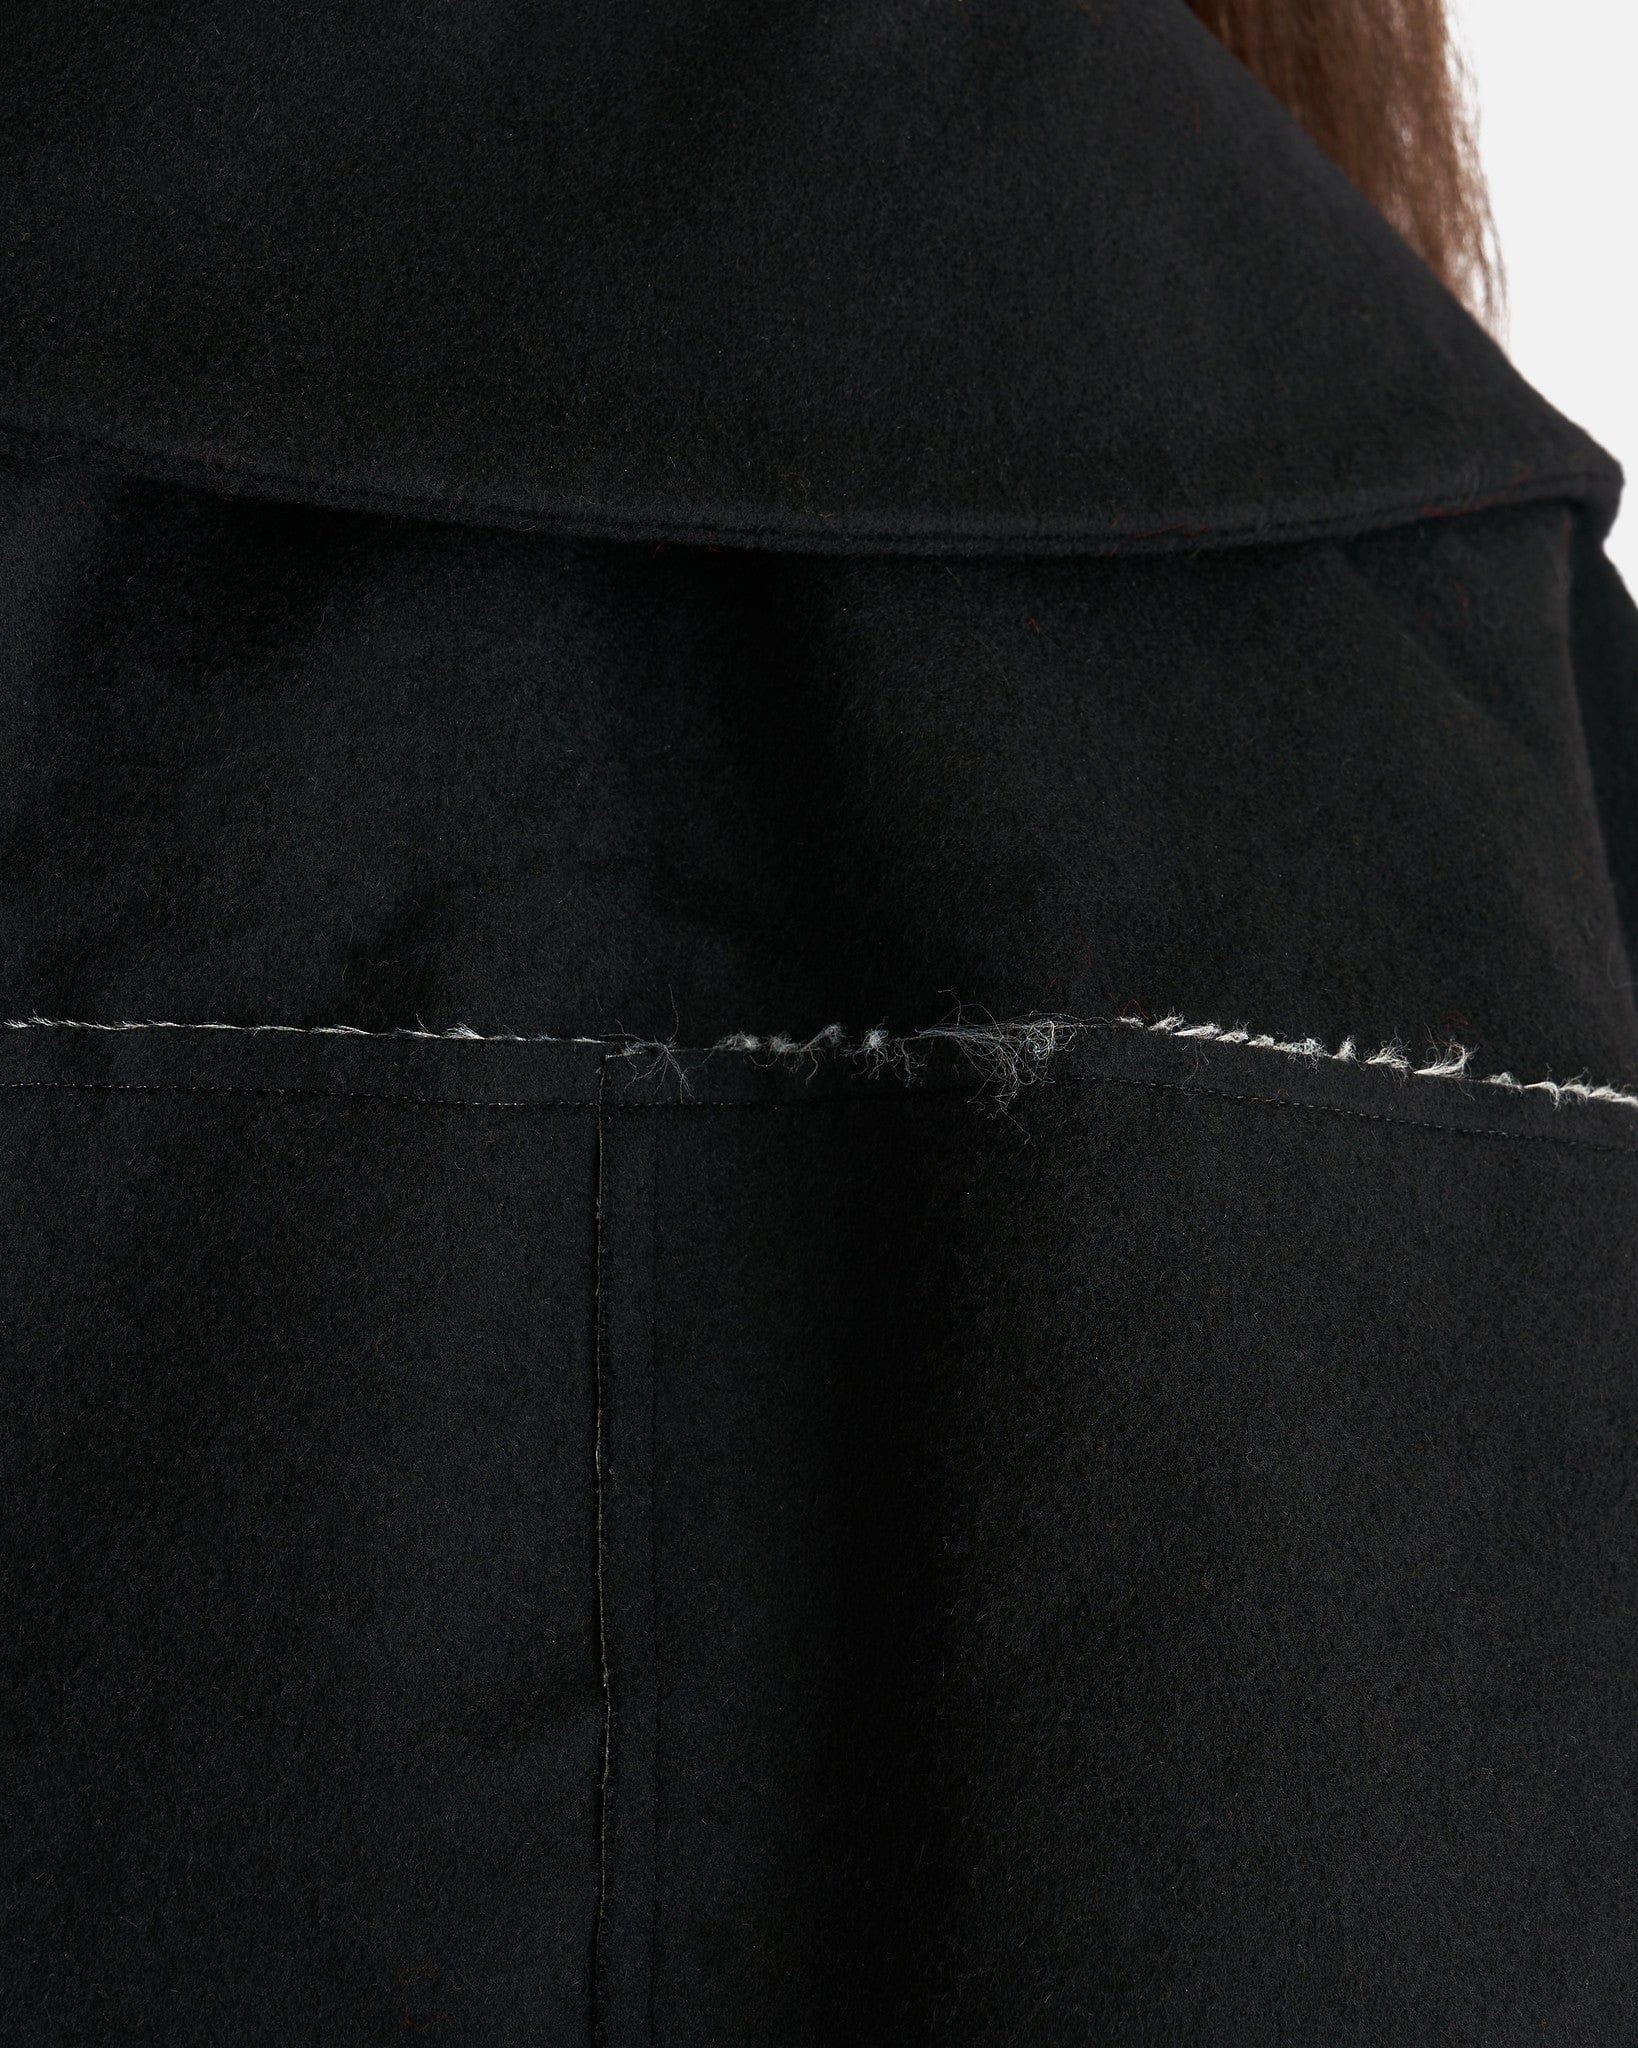 Marni Women Jackets Giubbotto Bonded Wool Jacket in Black